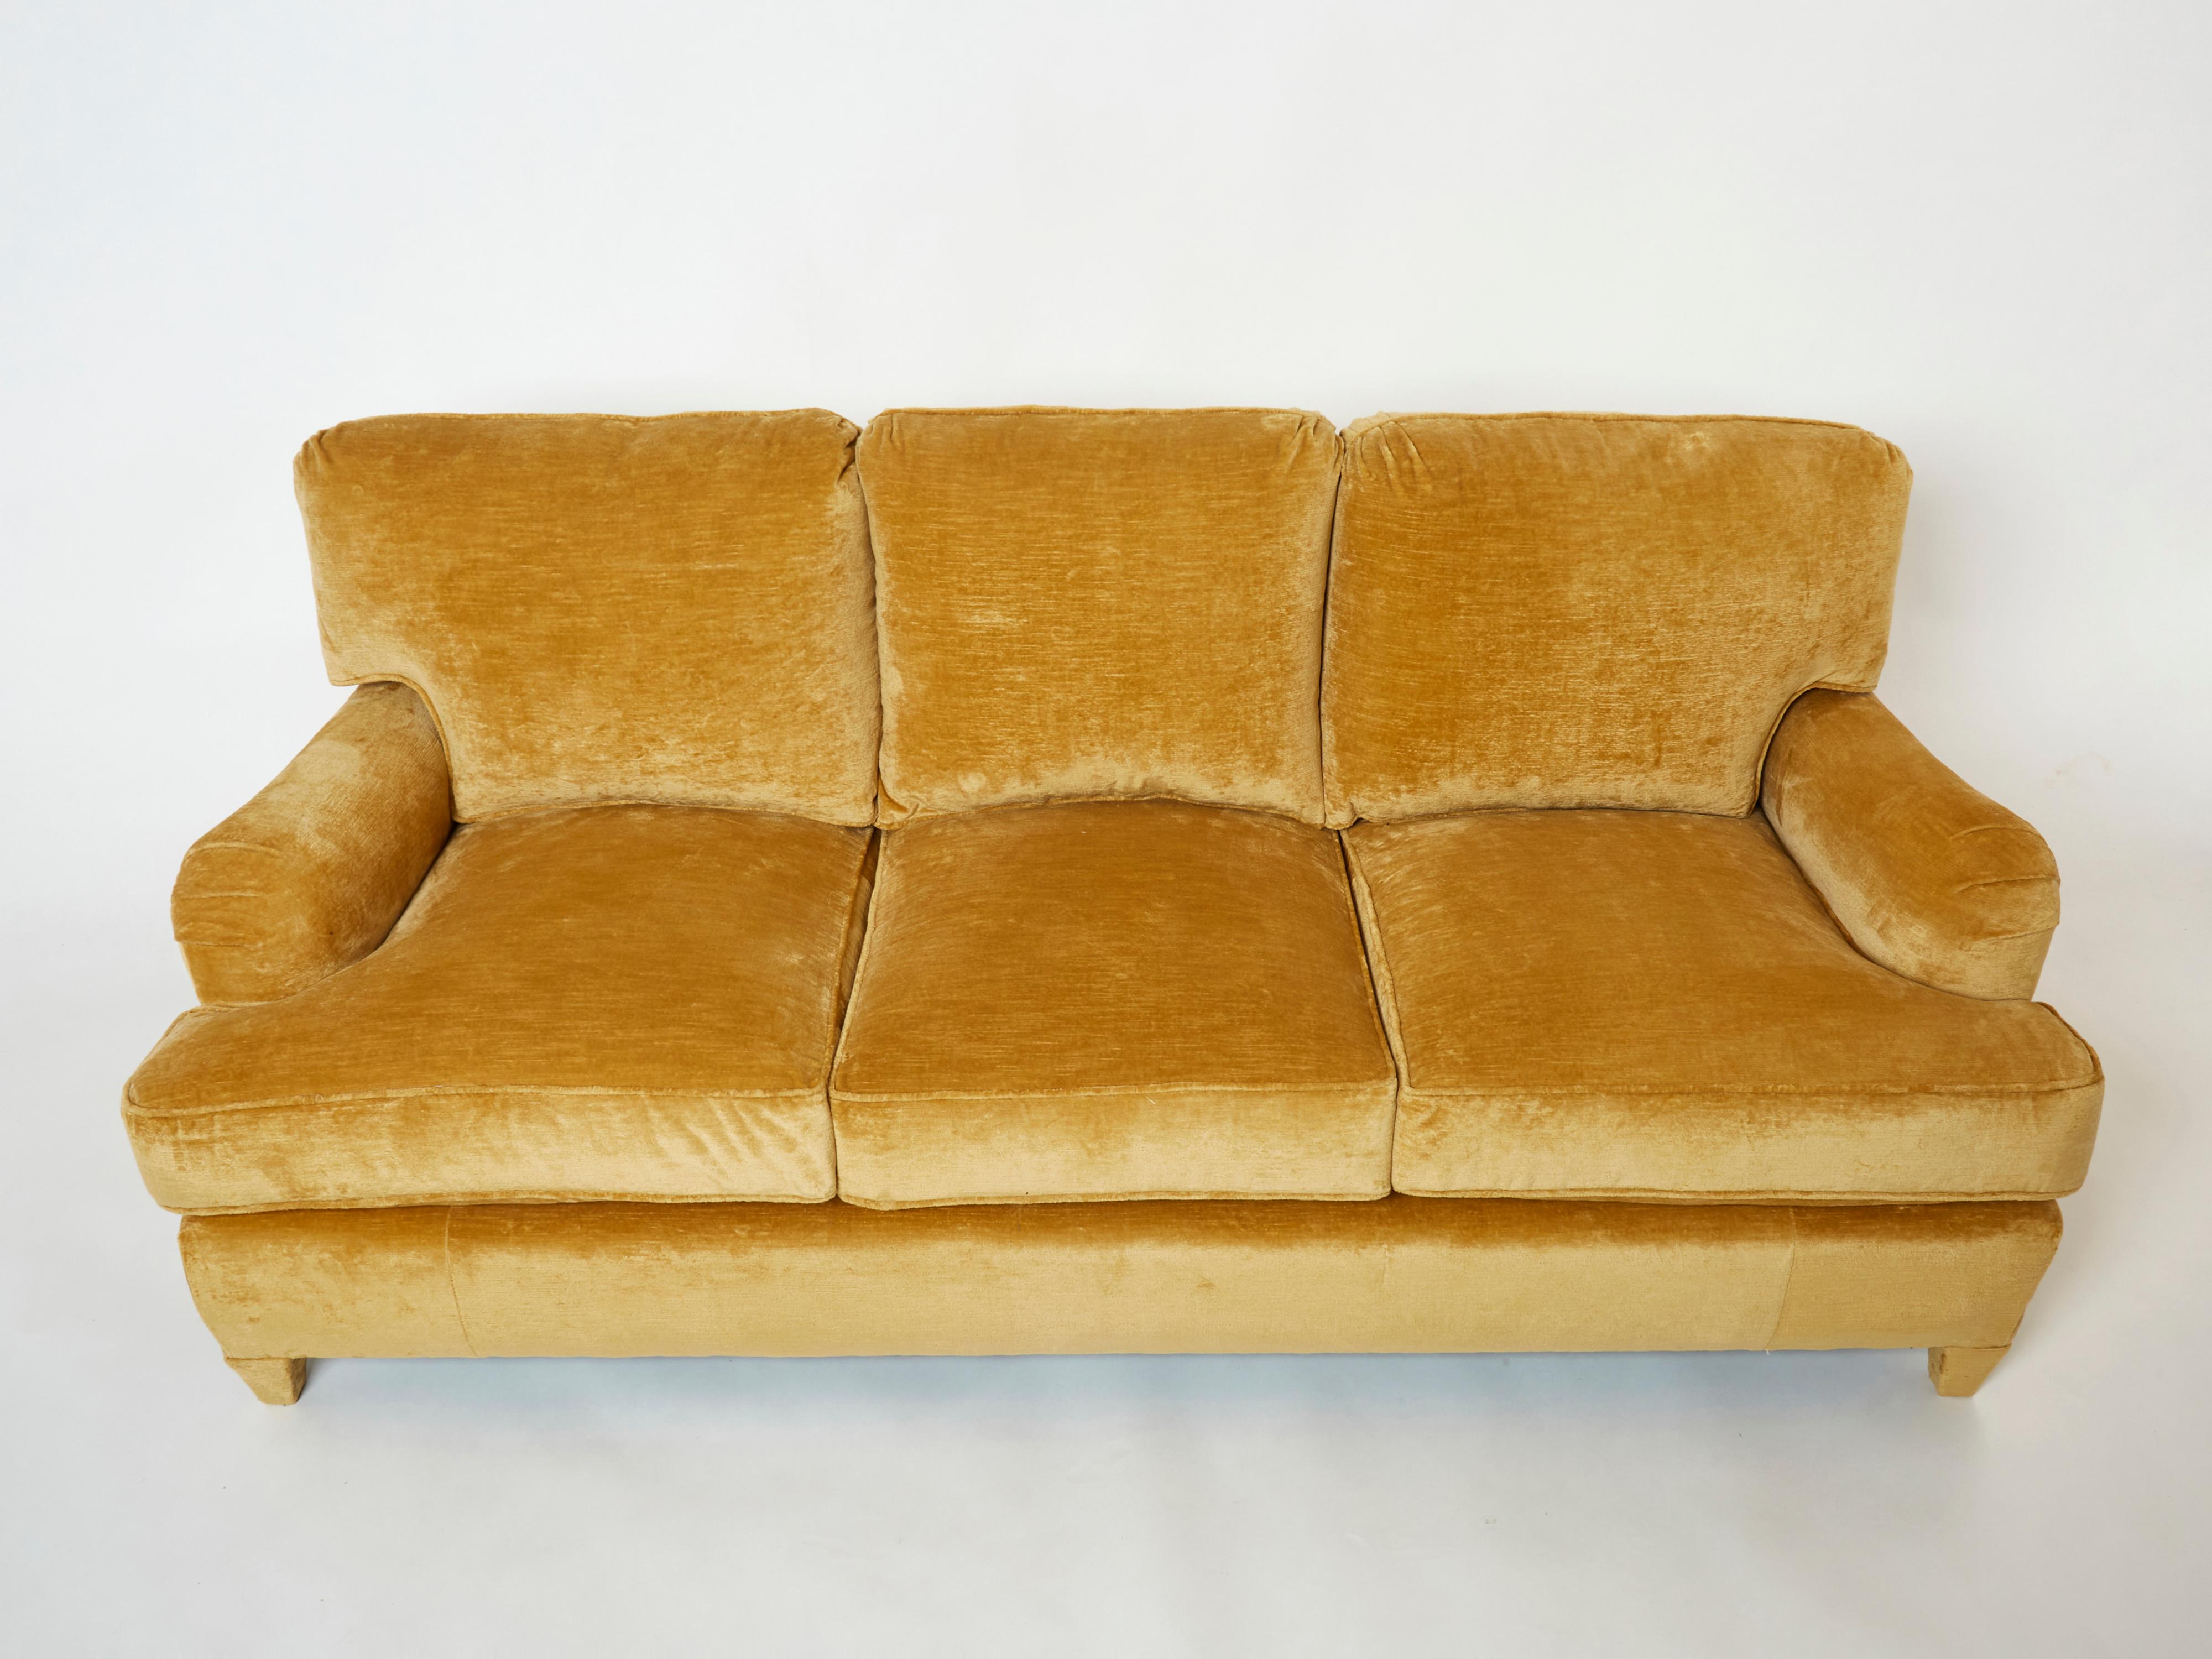 jean-michel frank sofa